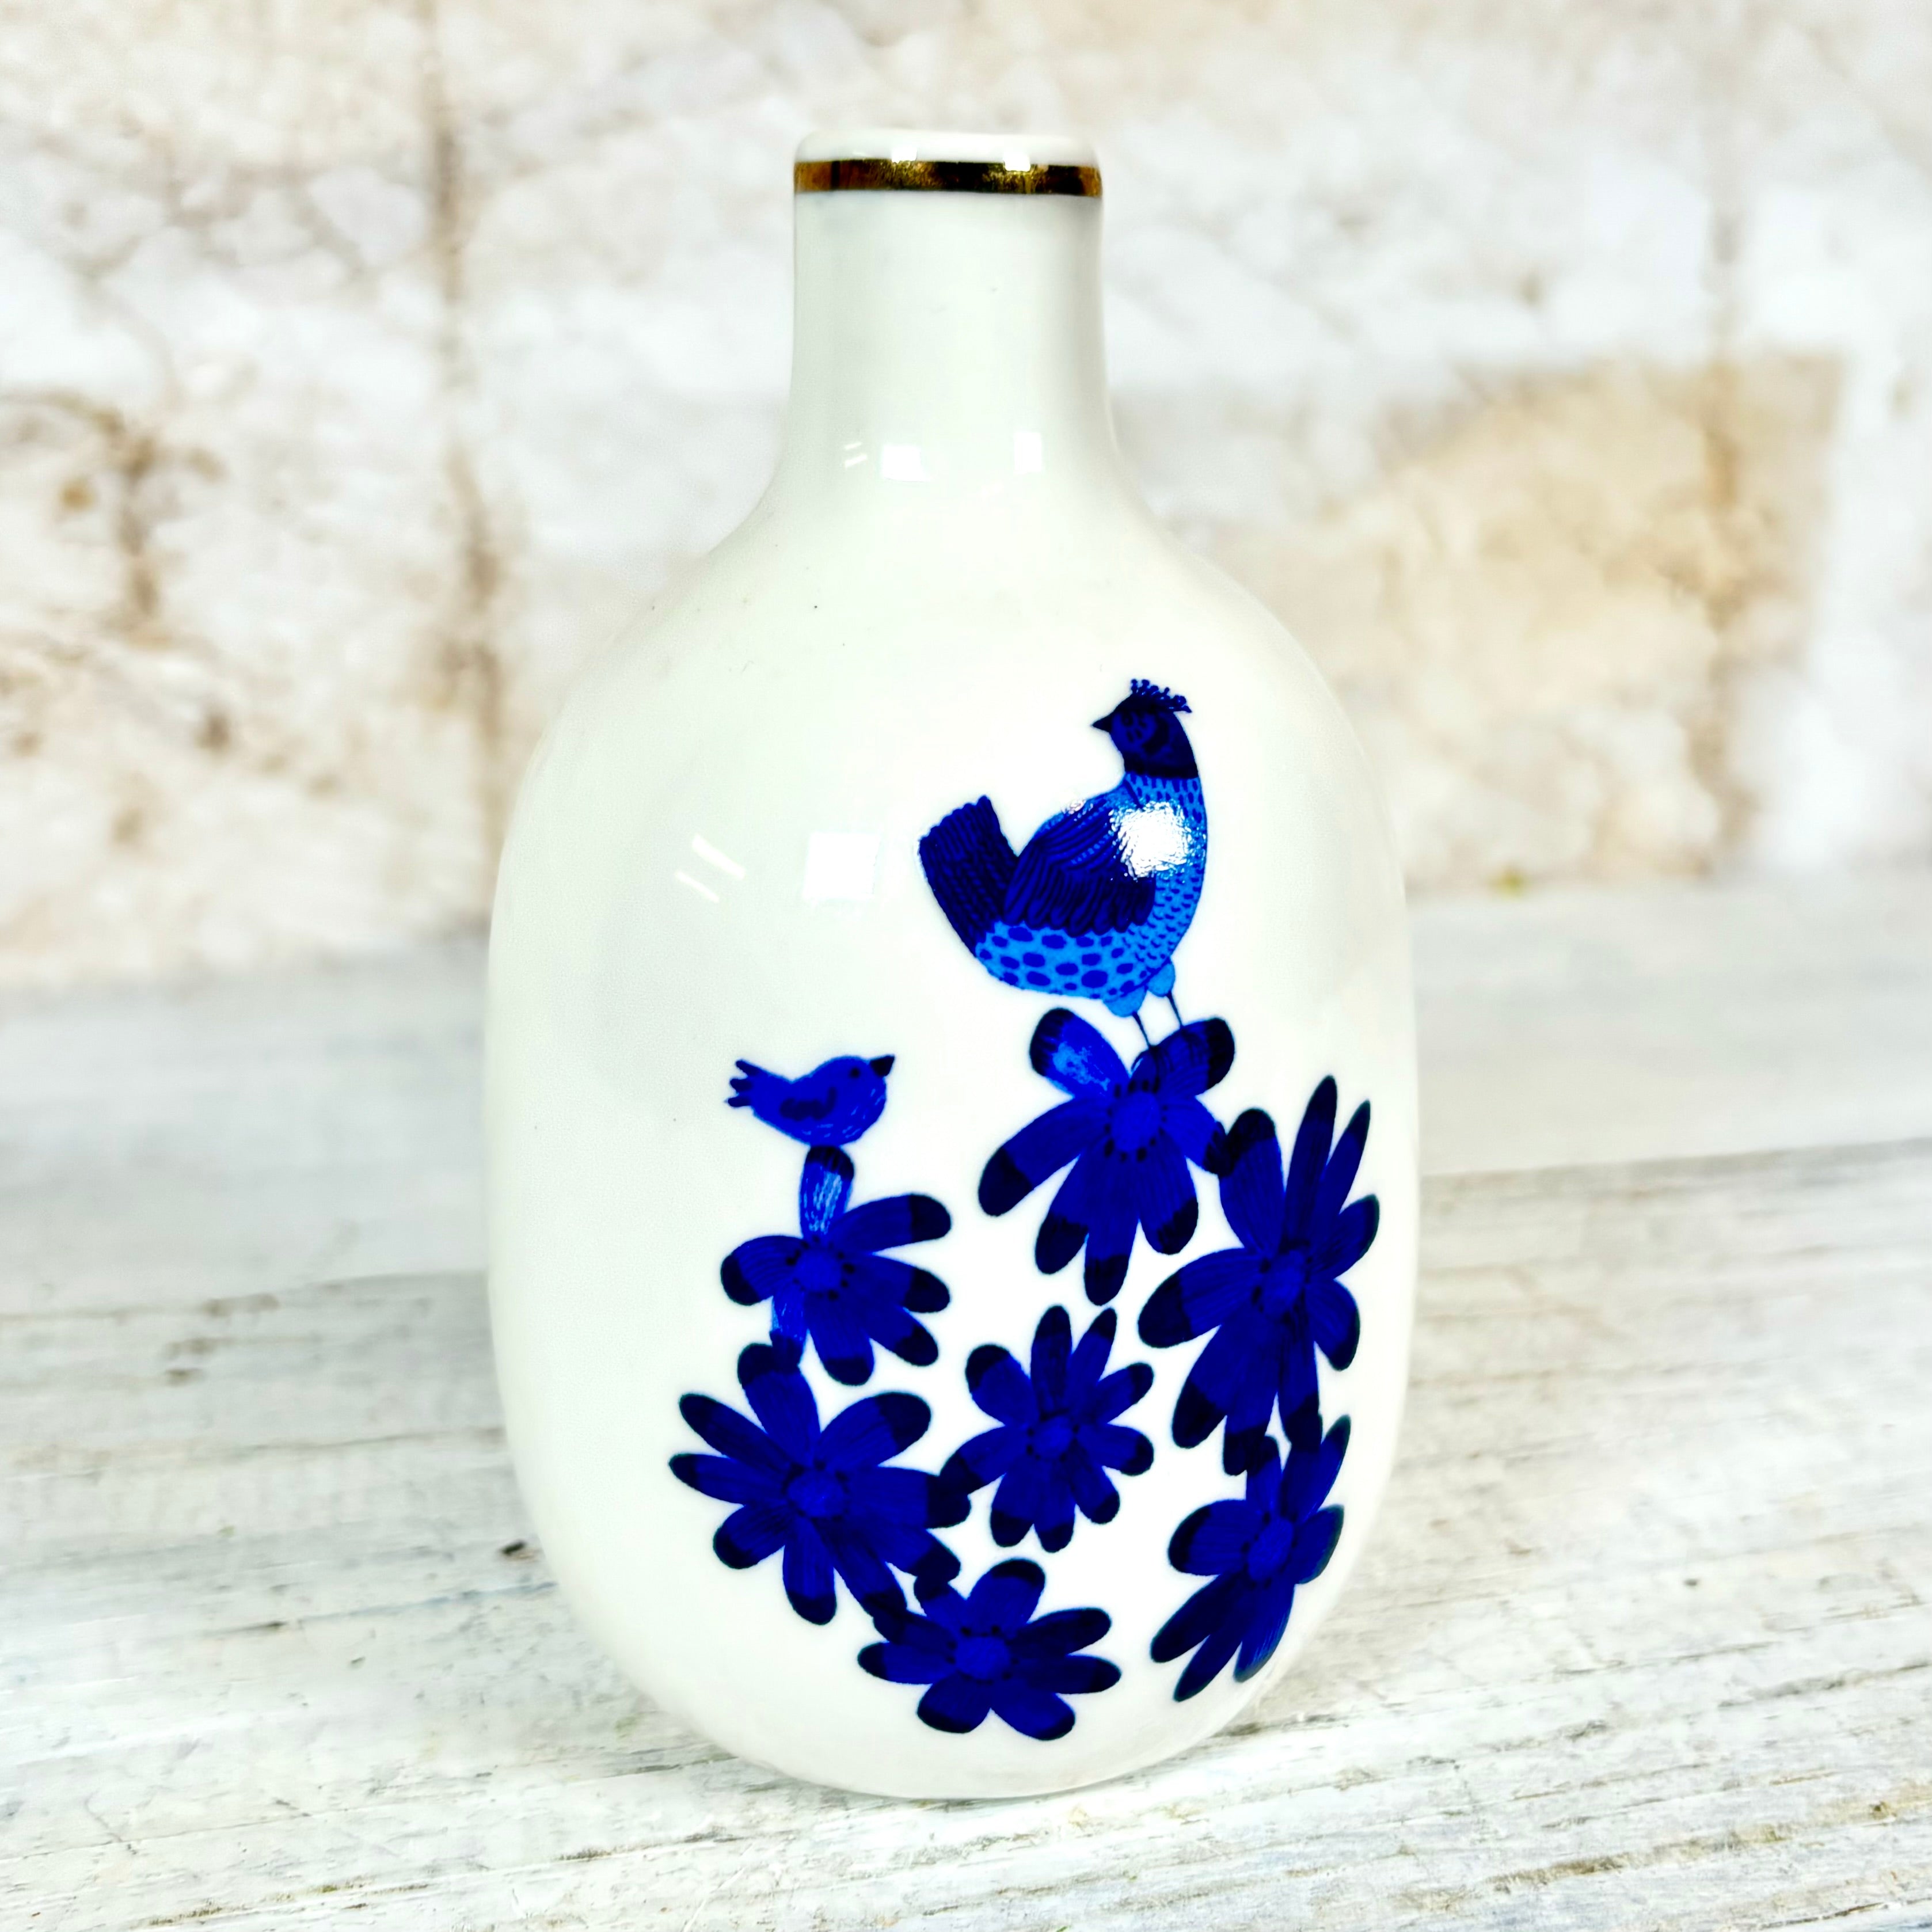 Ceramic Blue and White Bud Vase with Bird